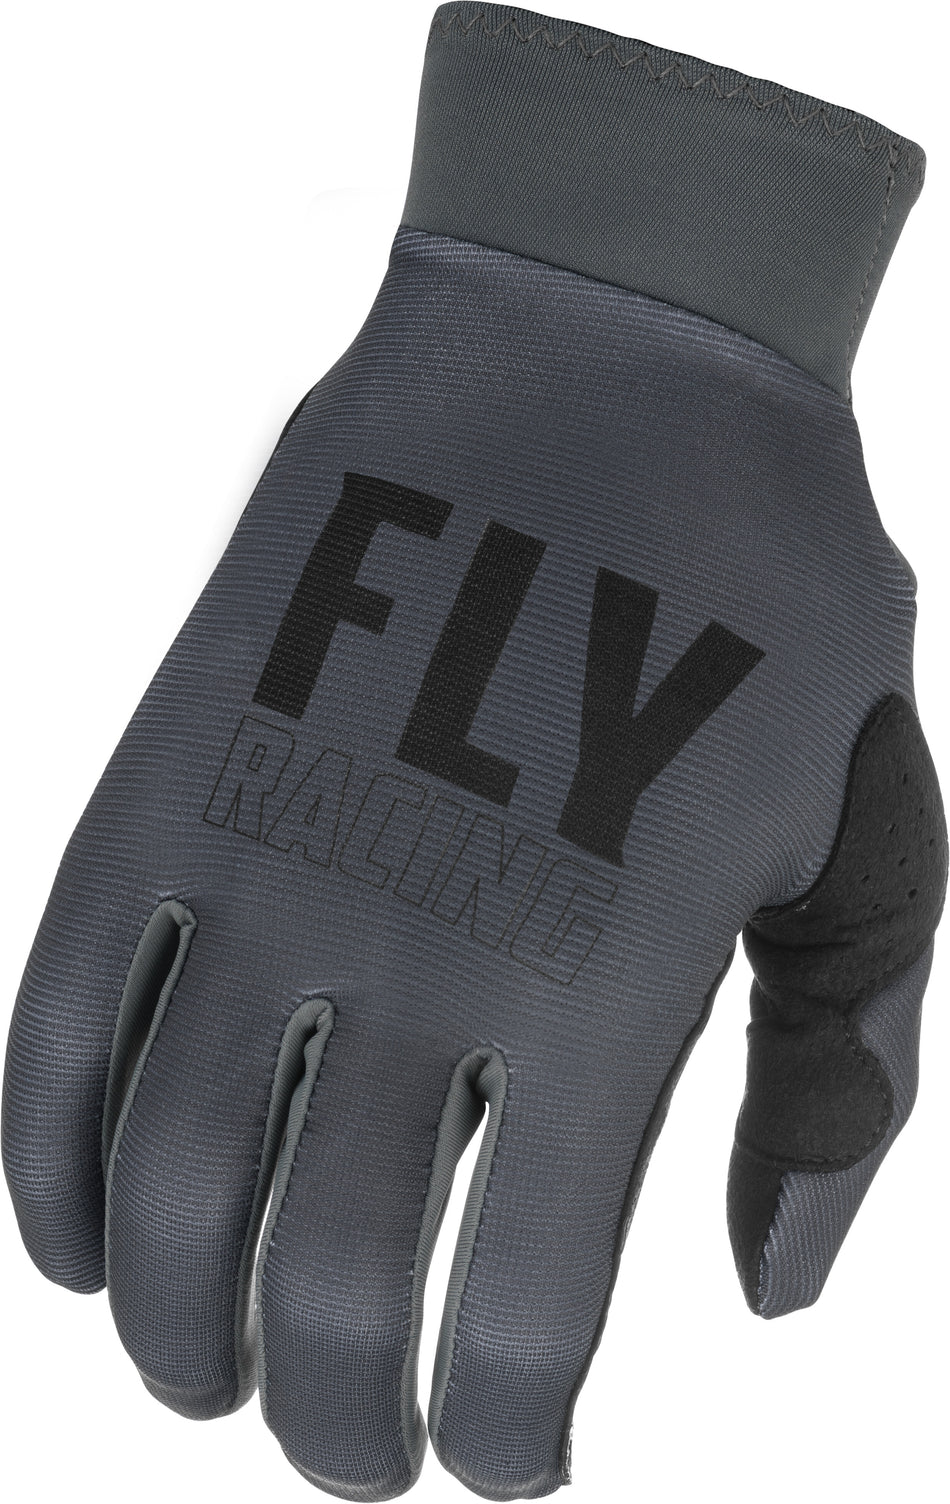 FLY RACING Pro Lite Gloves Grey/Black Md 374-856M